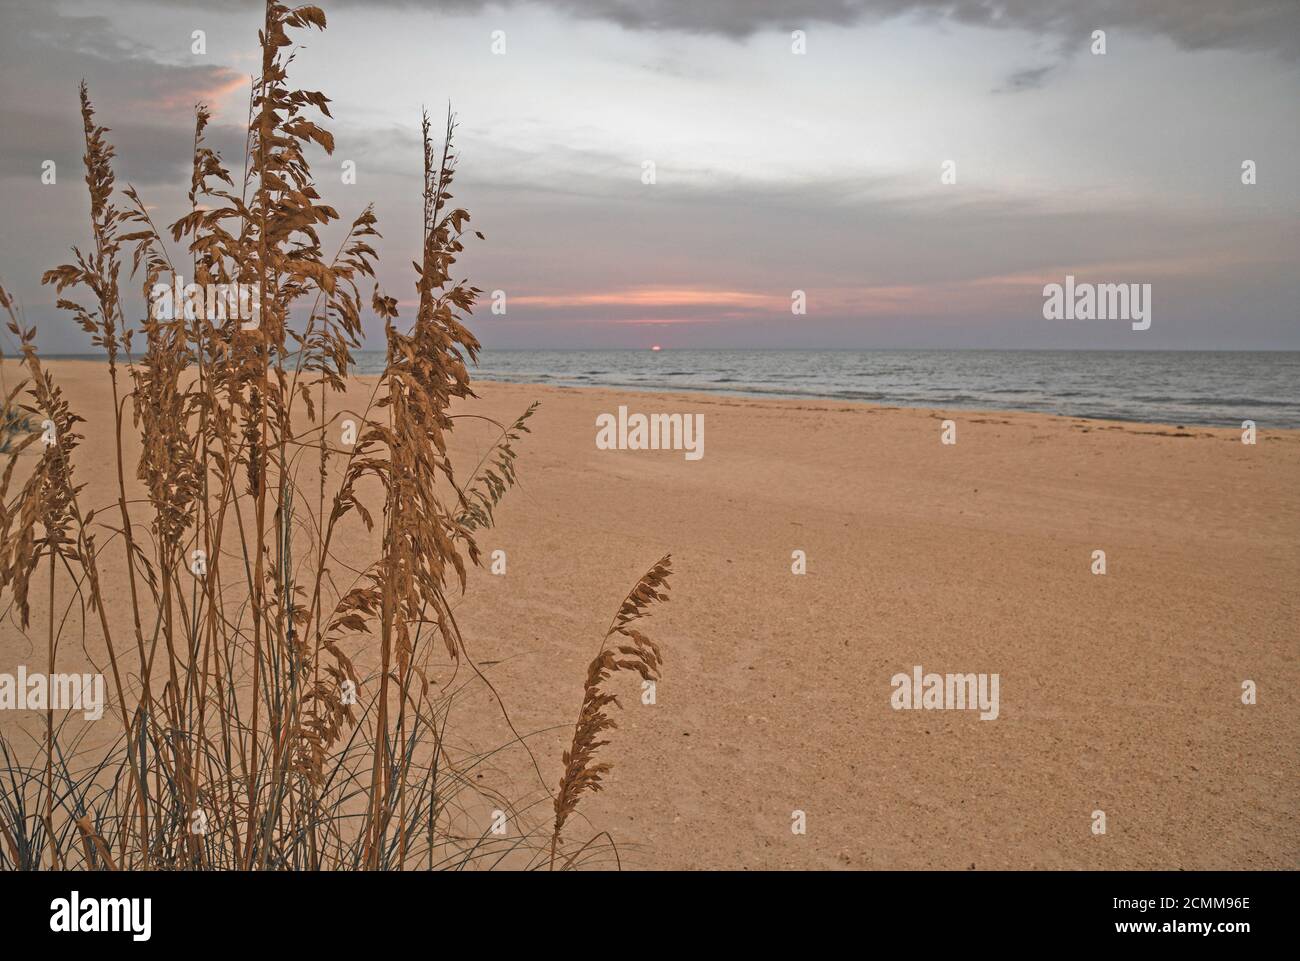 Sea Oats on Beach of the Gulf Coast of Florida at Dusk Stock Photo